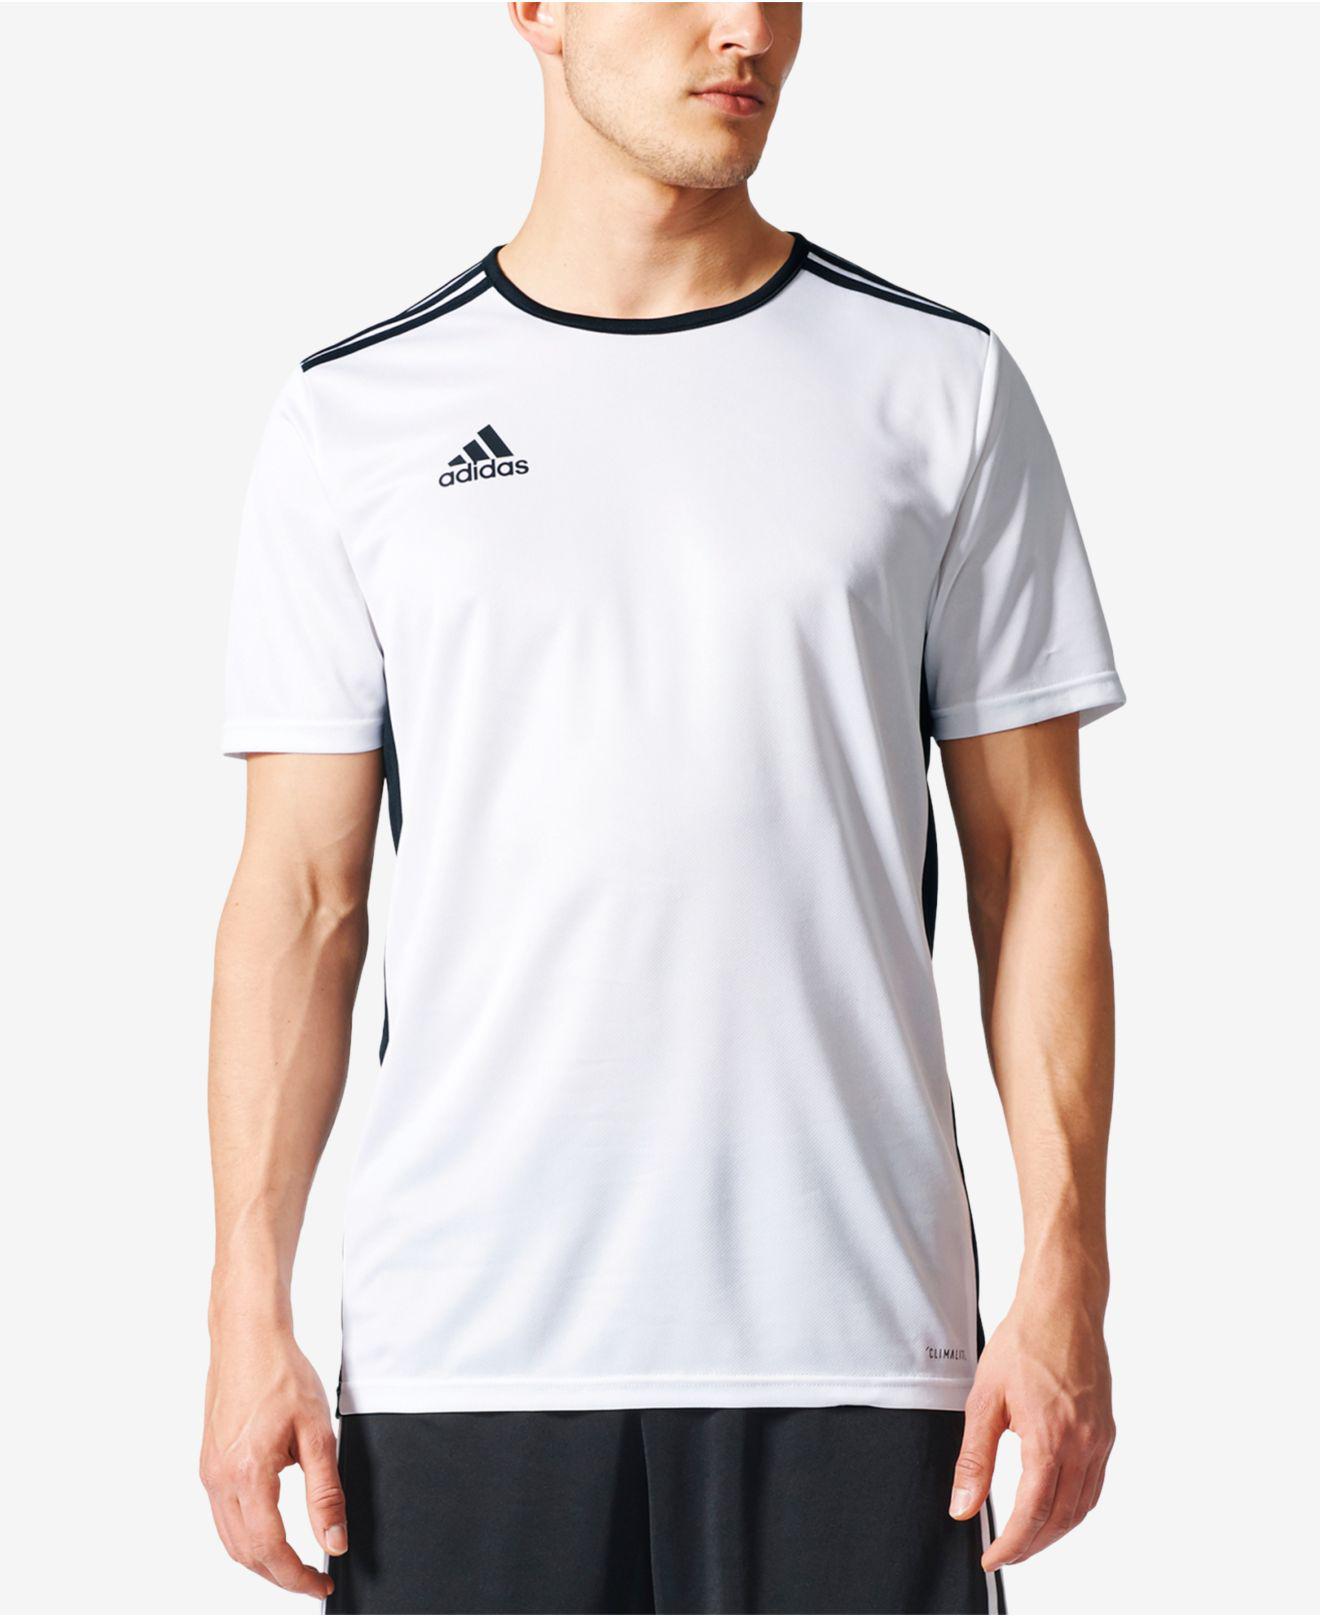 Lyst - Adidas Men's Entrada ClimaliteÂ® Soccer Shirt in White for Men